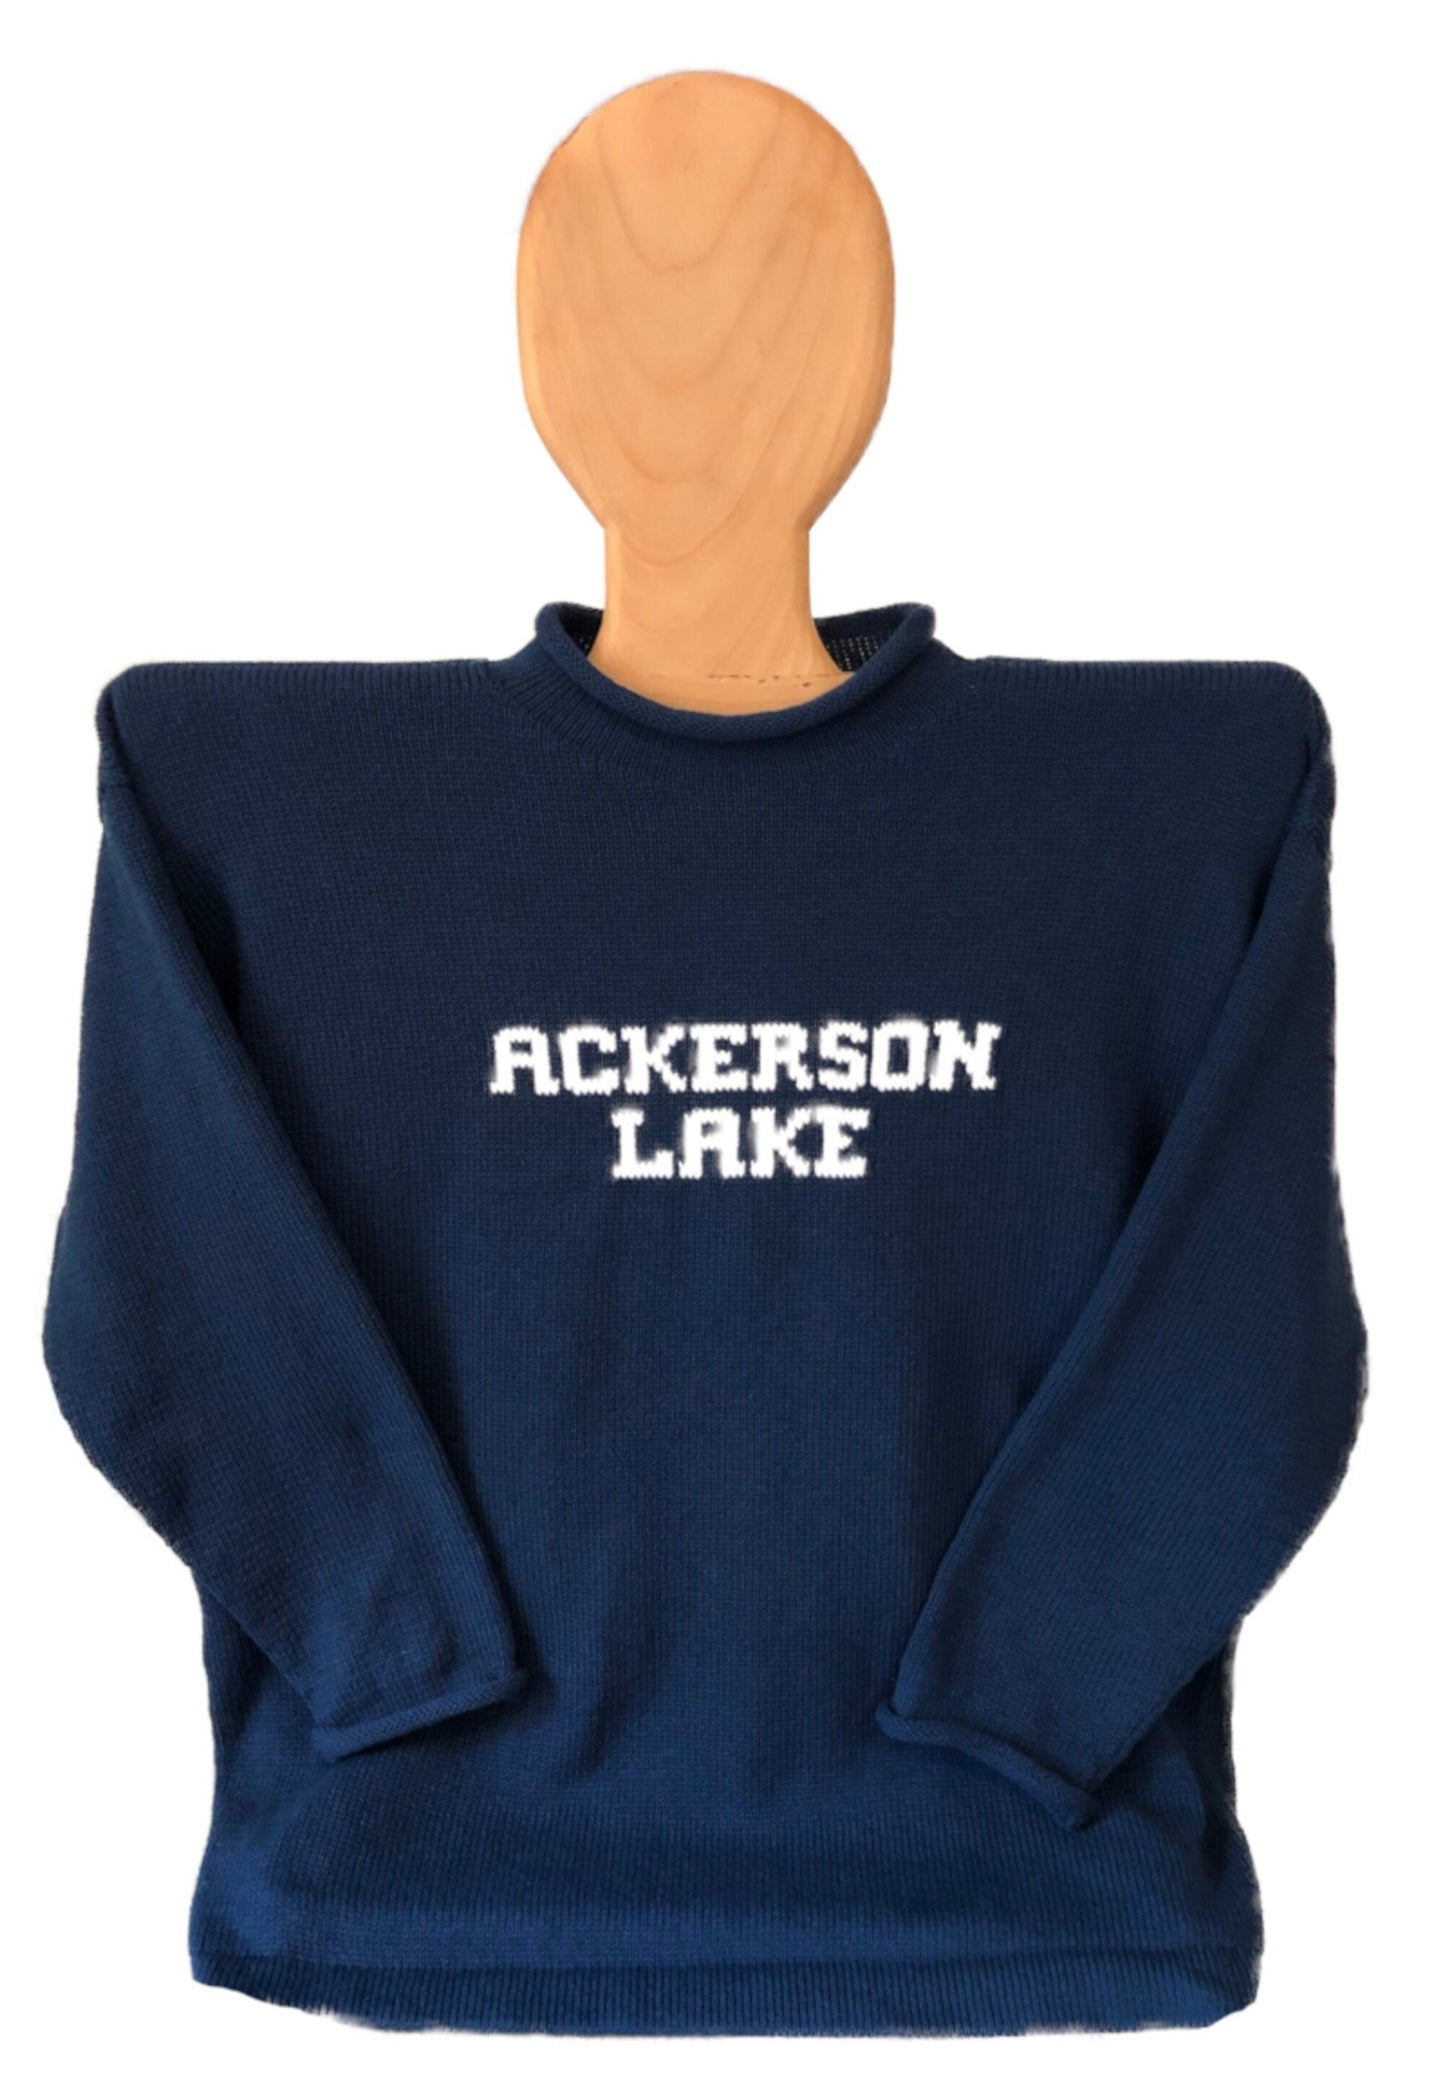 Ackerson Lake sweater